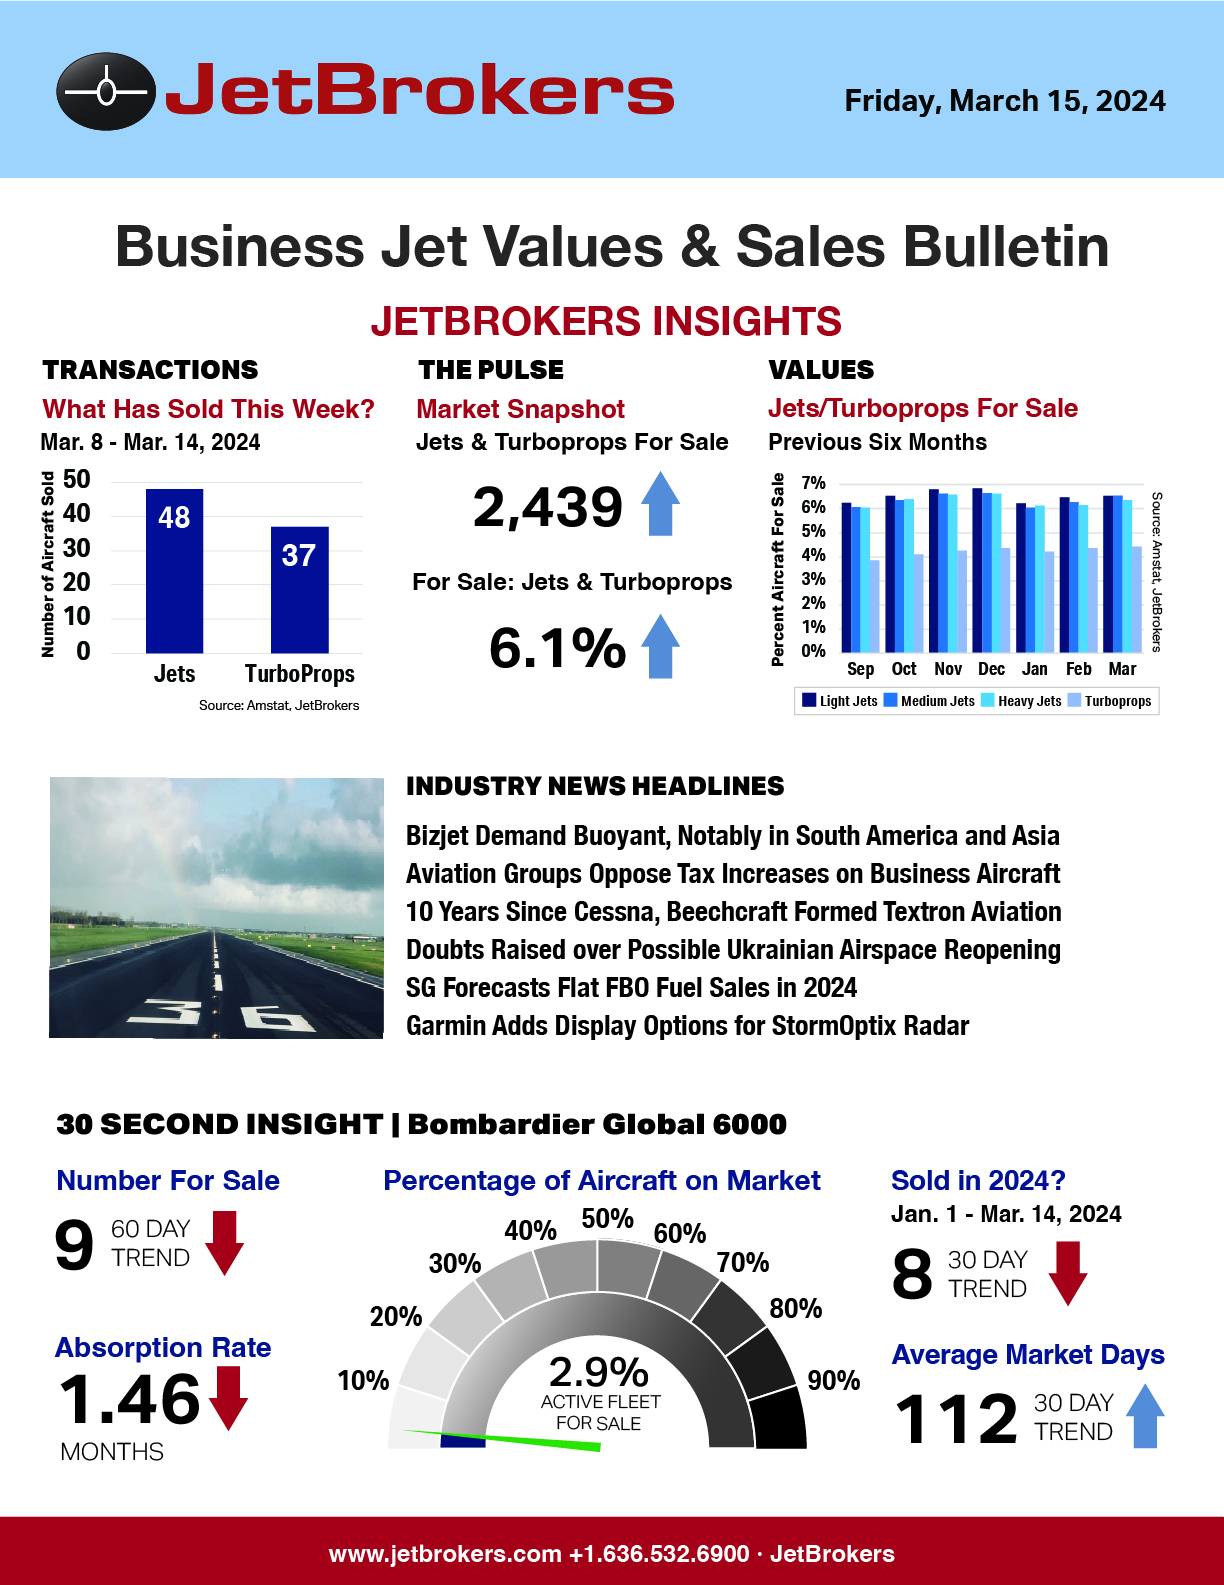 JetBrokers Business Jet Values & Sales Bulletin - March 15, 2024